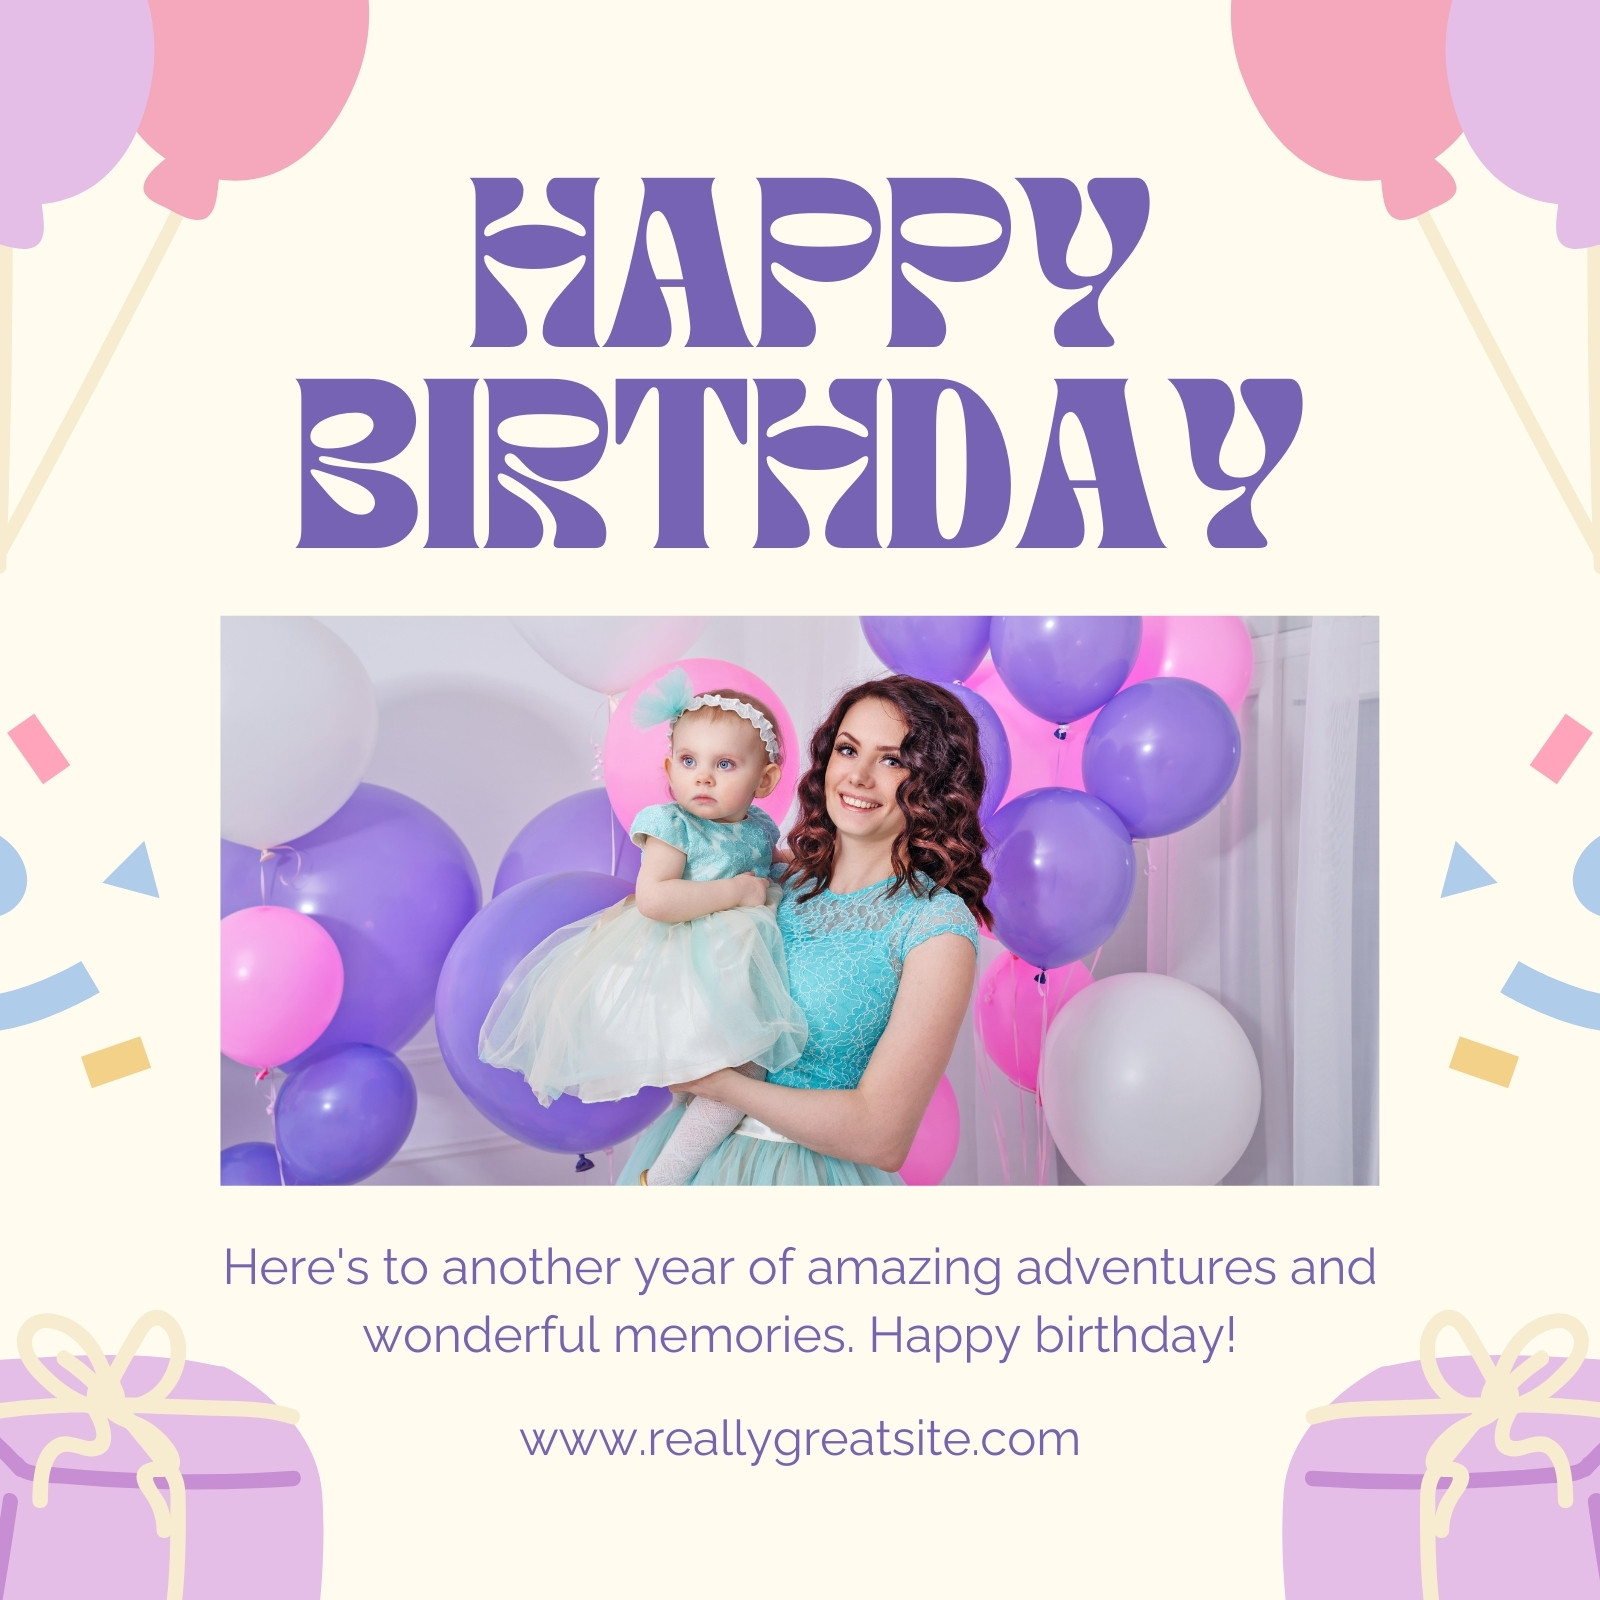 https://marketplace.canva.com/EAFzehFCasc/1/0/1600w/canva-cream-and-purple-illustrated-birthday-greeting-card-sYStY5ljM3U.jpg